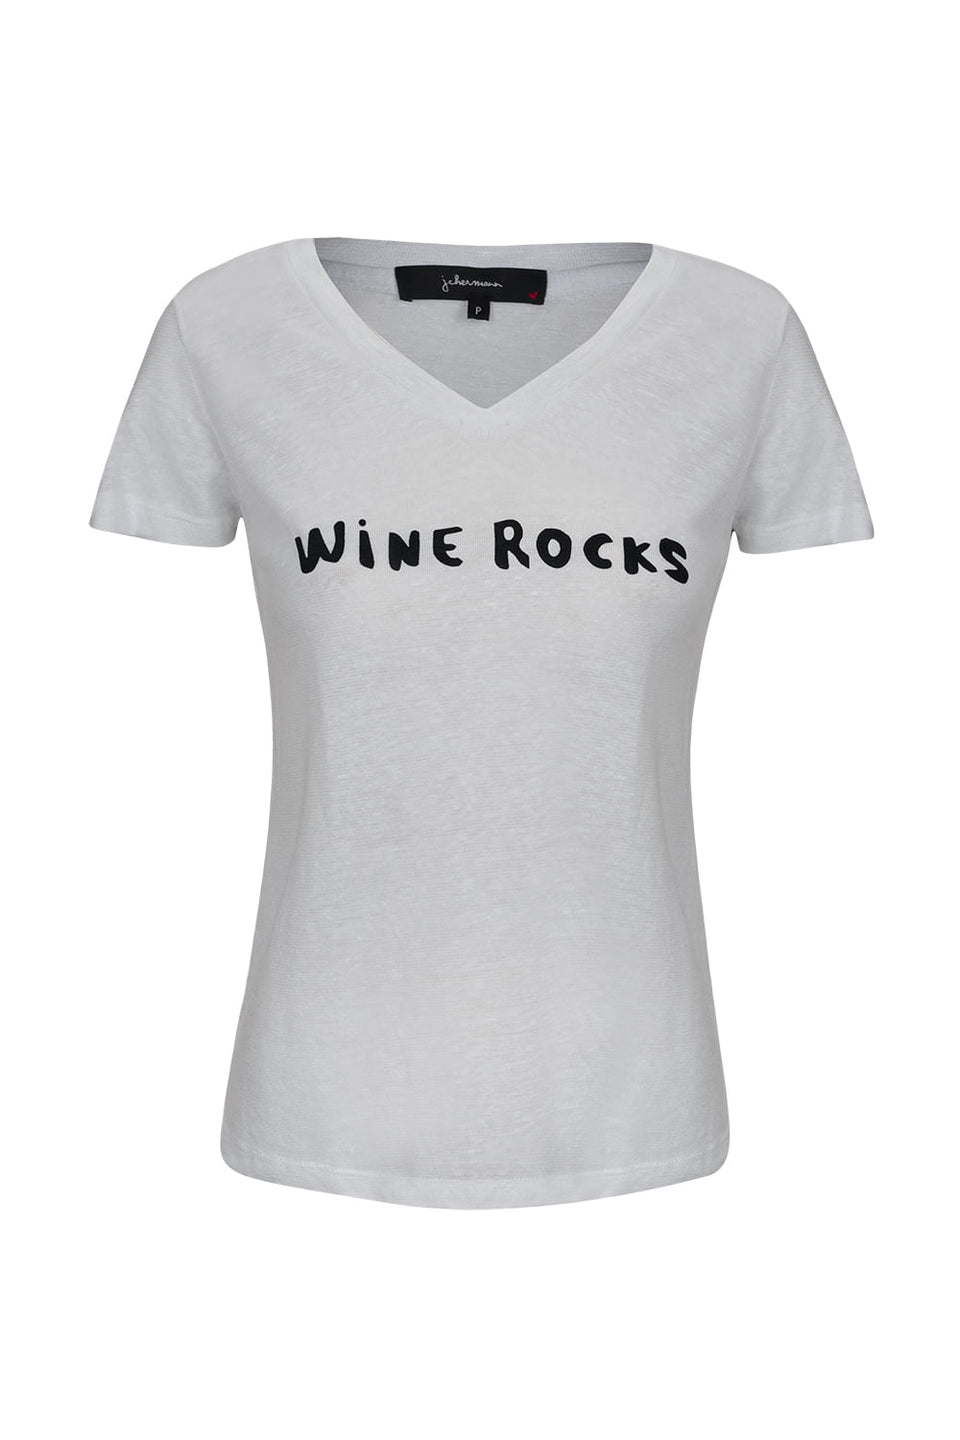 Camiseta Wine Rocks Branca